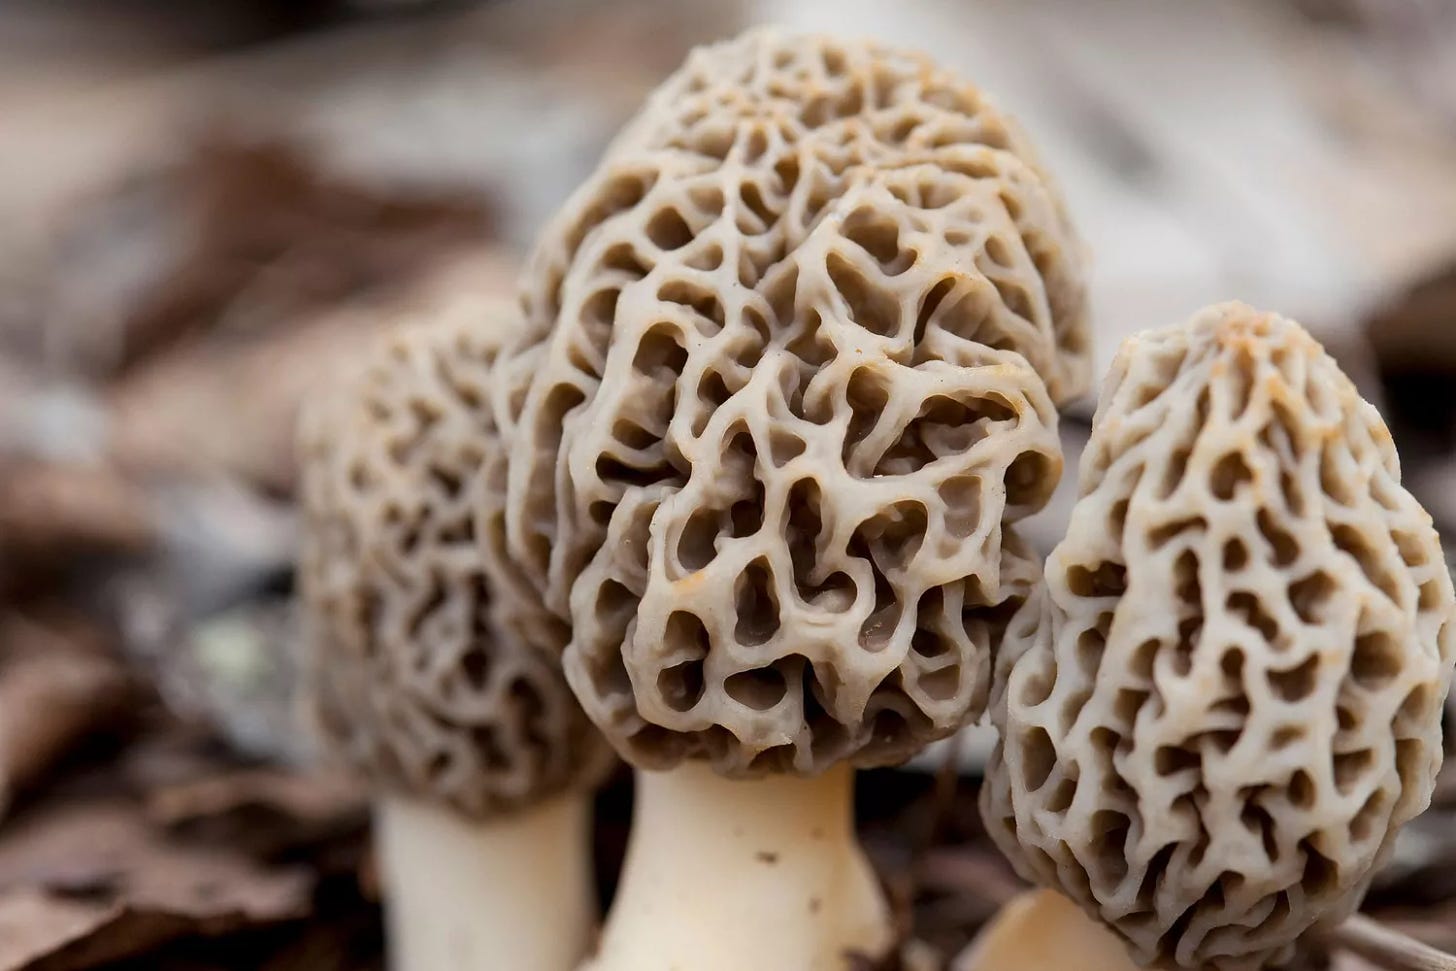 Morel mushrooms close-up shot